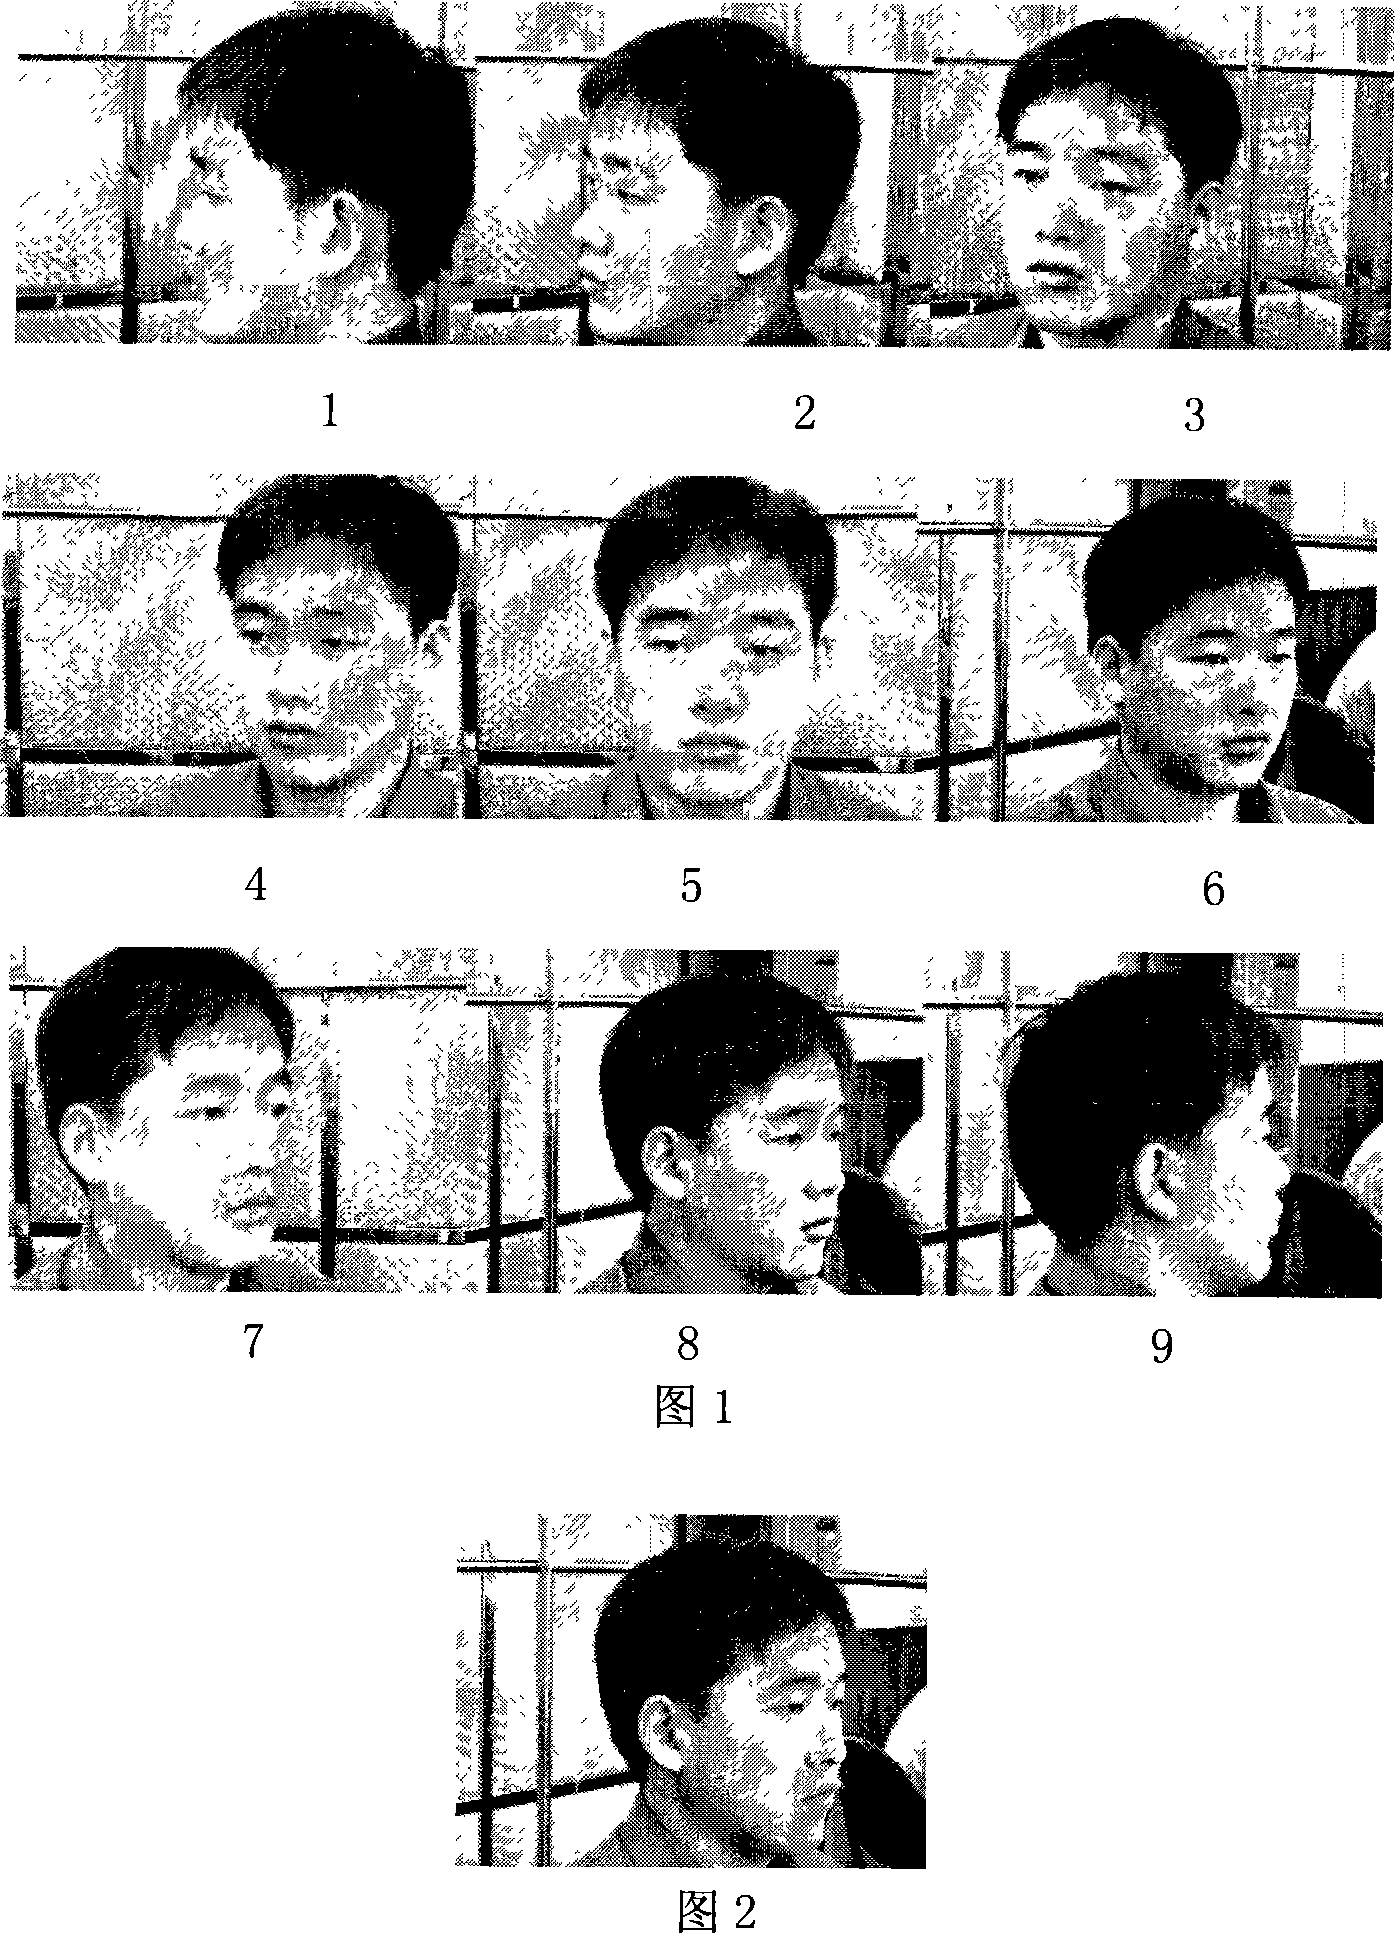 Method for making human face posture estimation utilizing dimension reduction method